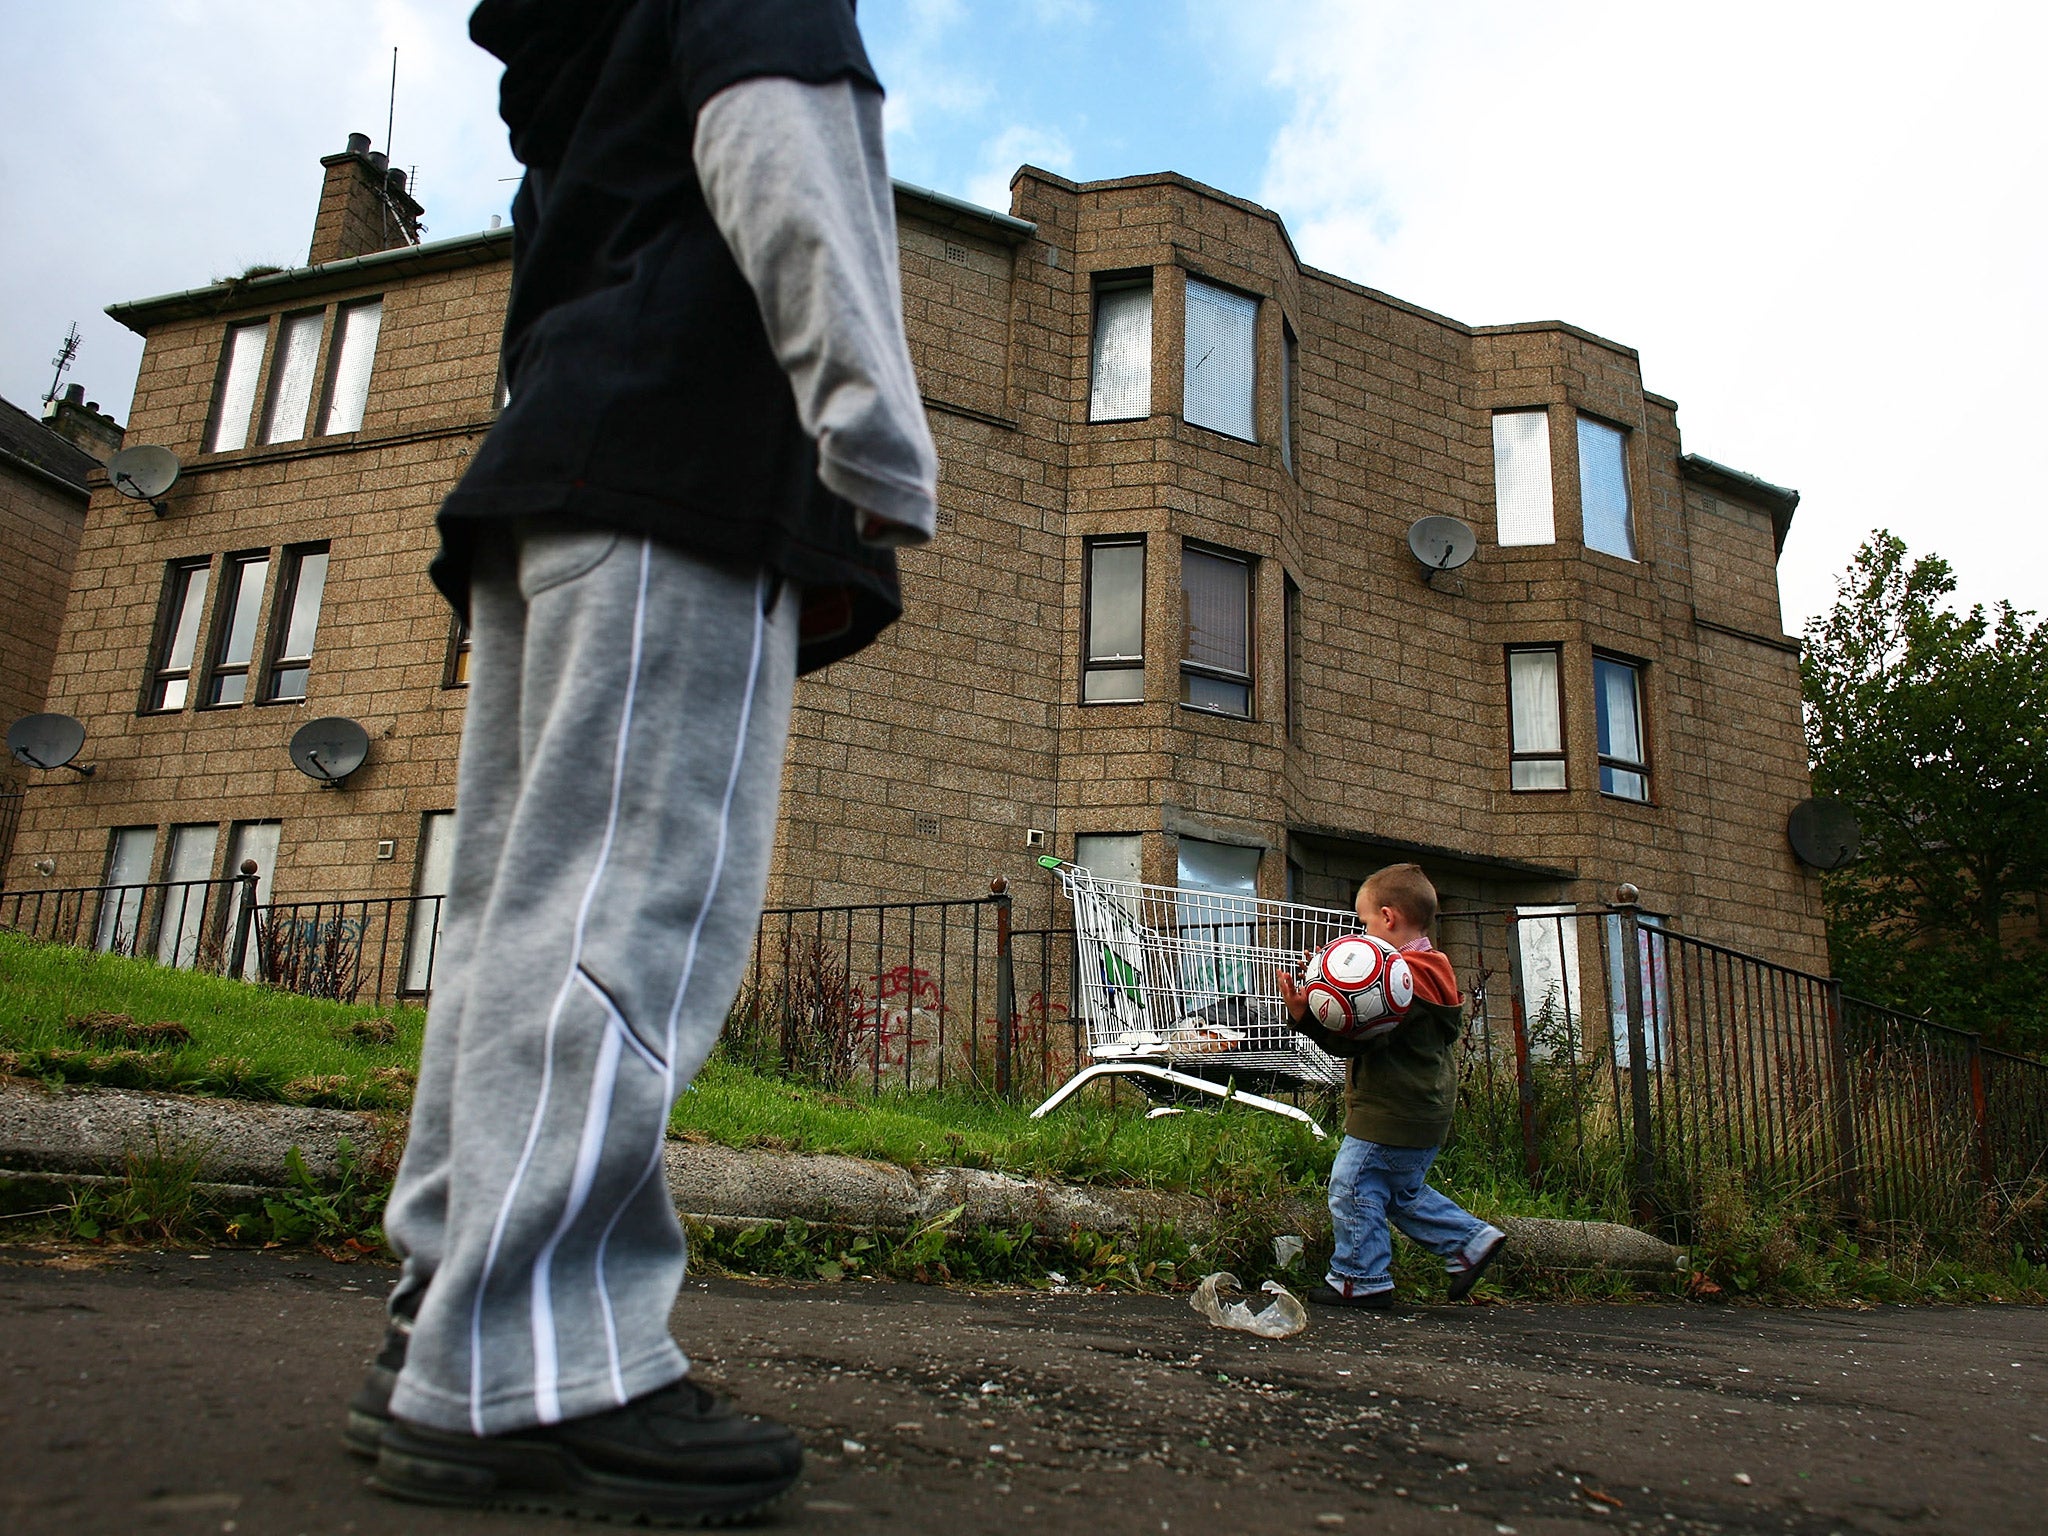 Children on the streets of Govan, Glasgow